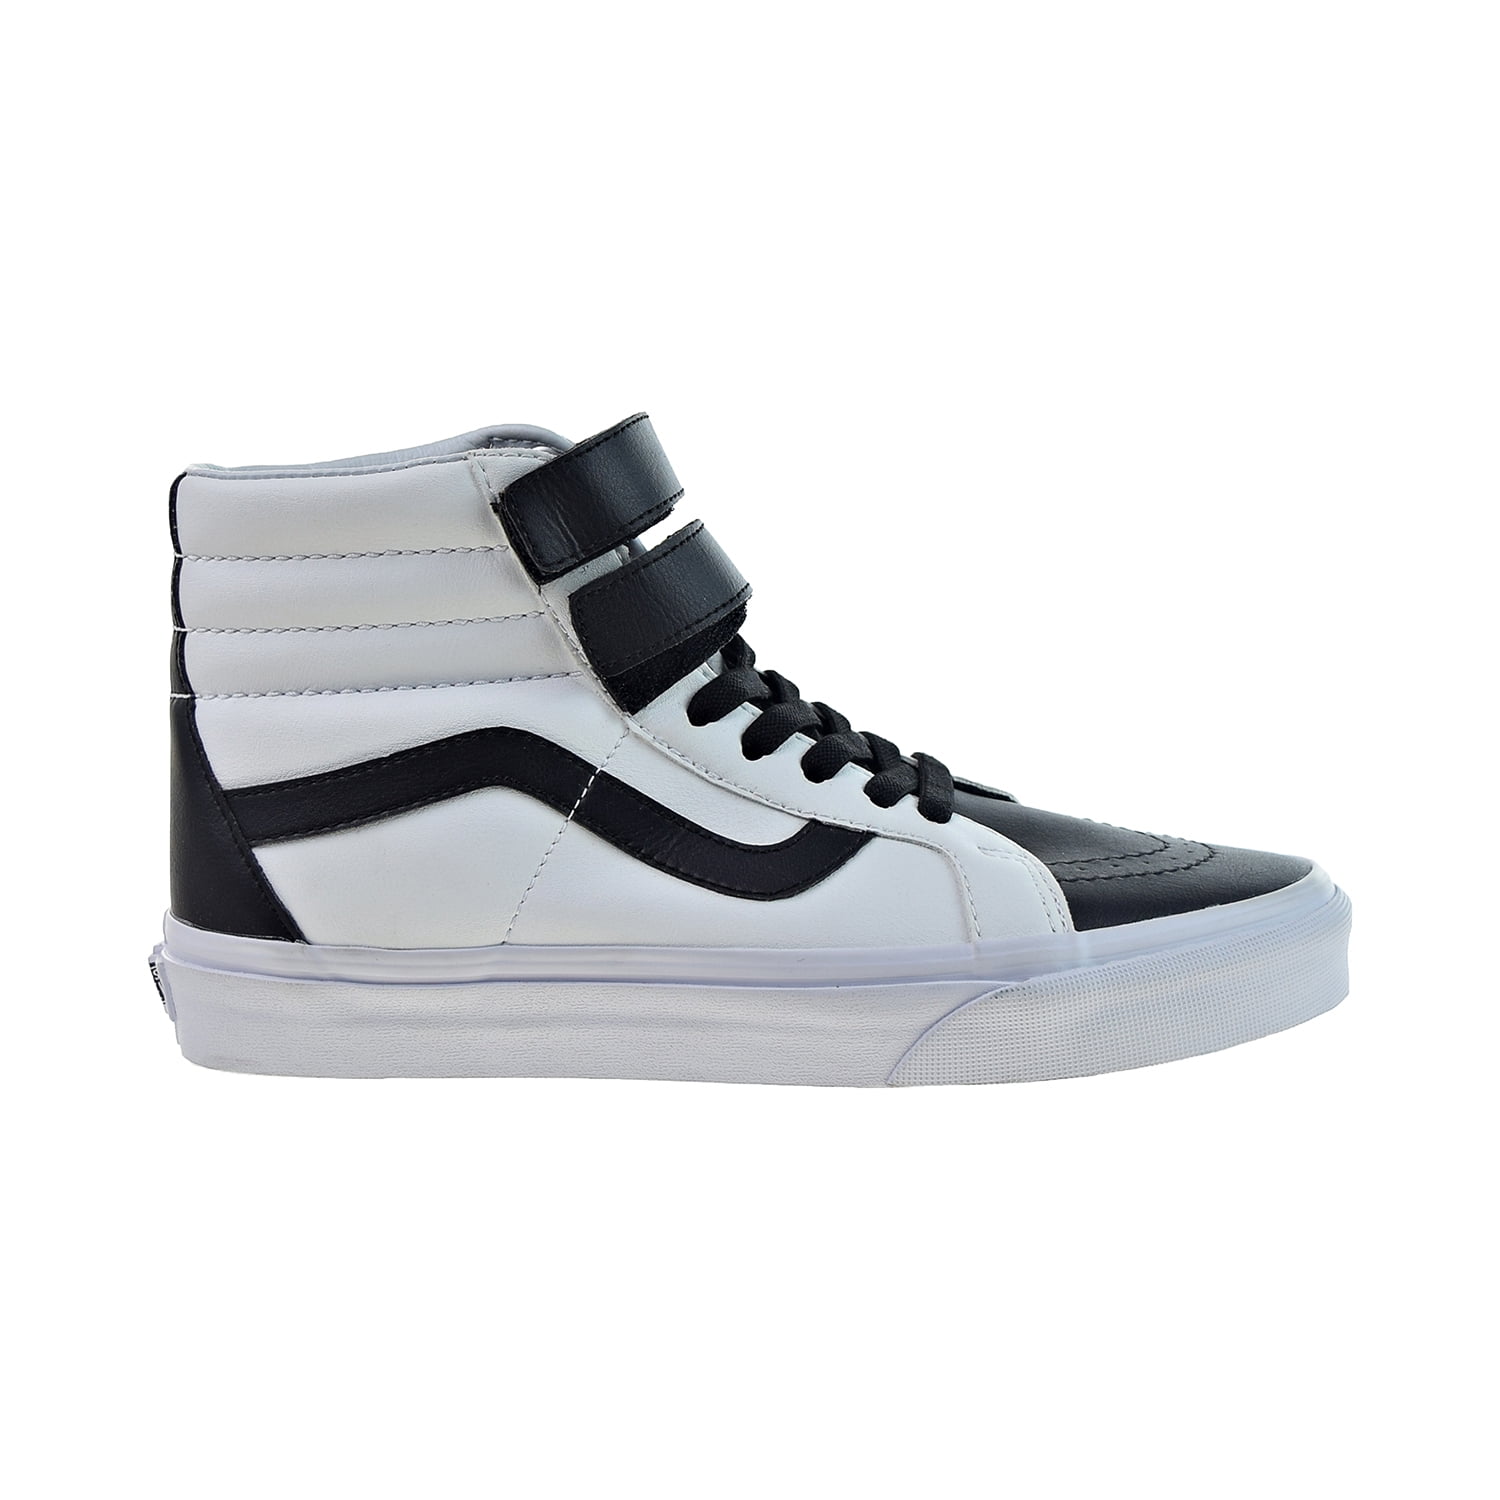 Vans Sk8-Hi Reissue Men's Shoes Black-White vn0a3mv6-nqr 